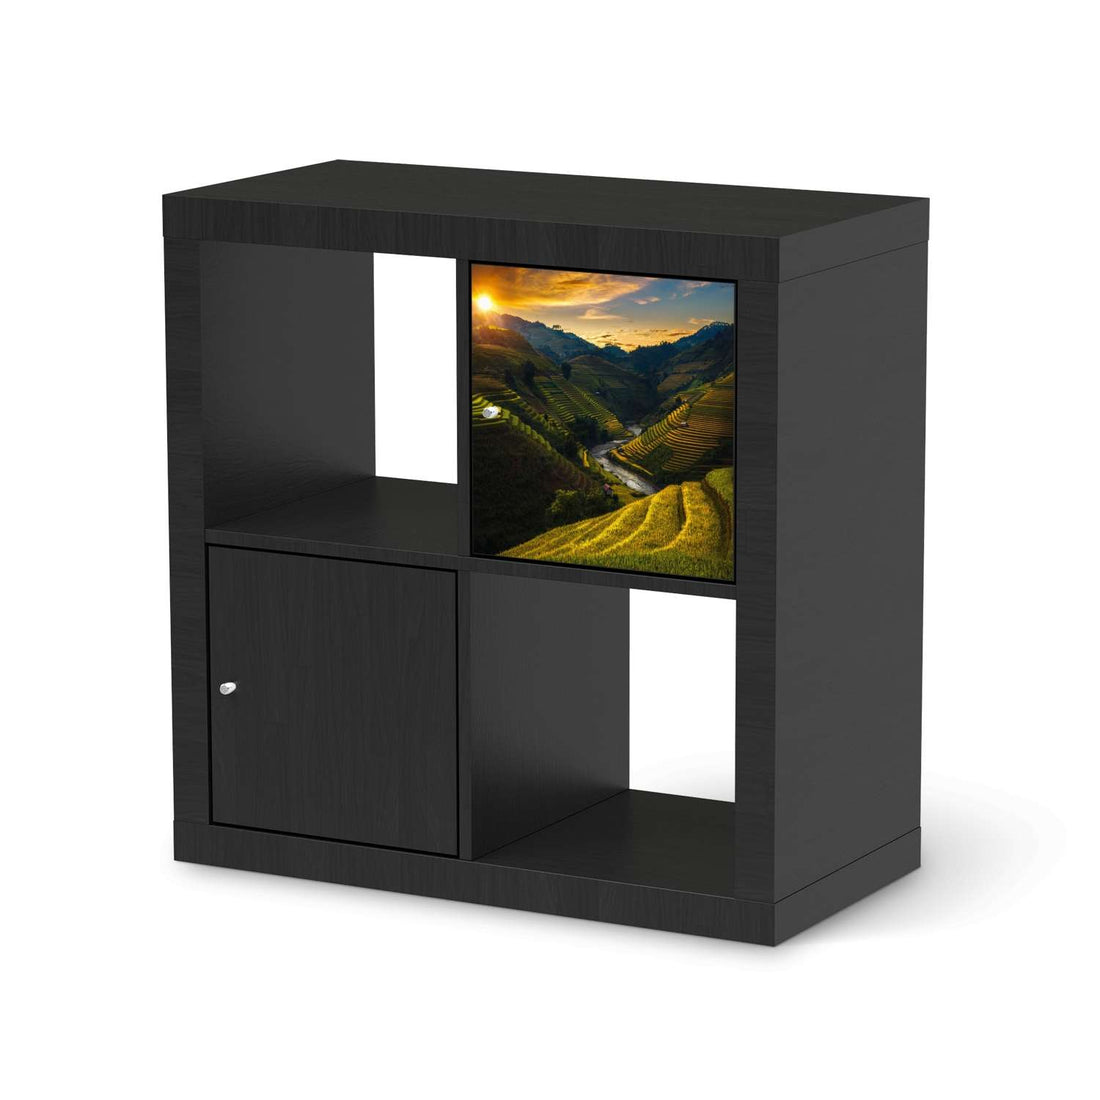 Selbstklebende Folie Reisterrassen - IKEA Kallax Regal 1 Türe - schwarz